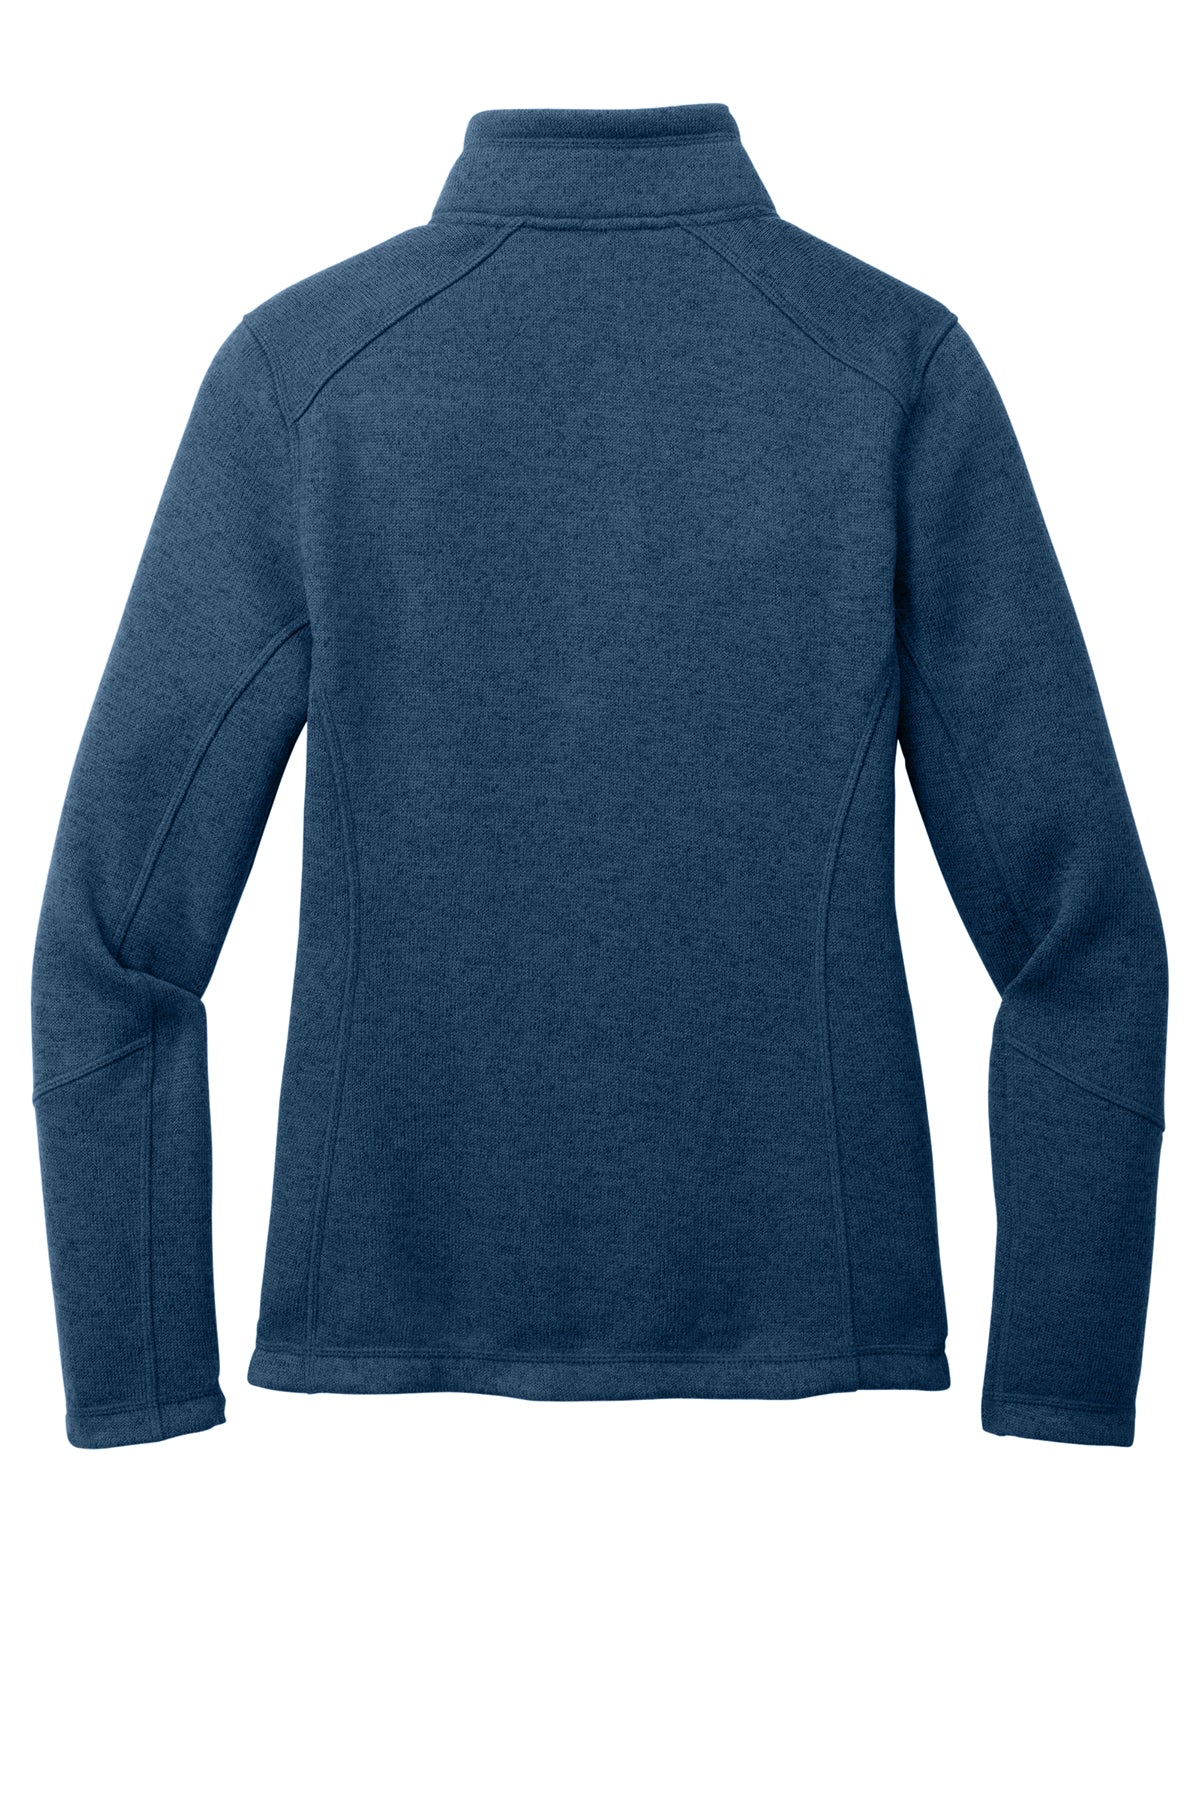 L428 Port Authority® Ladies Arc Sweater Fleece Jacket